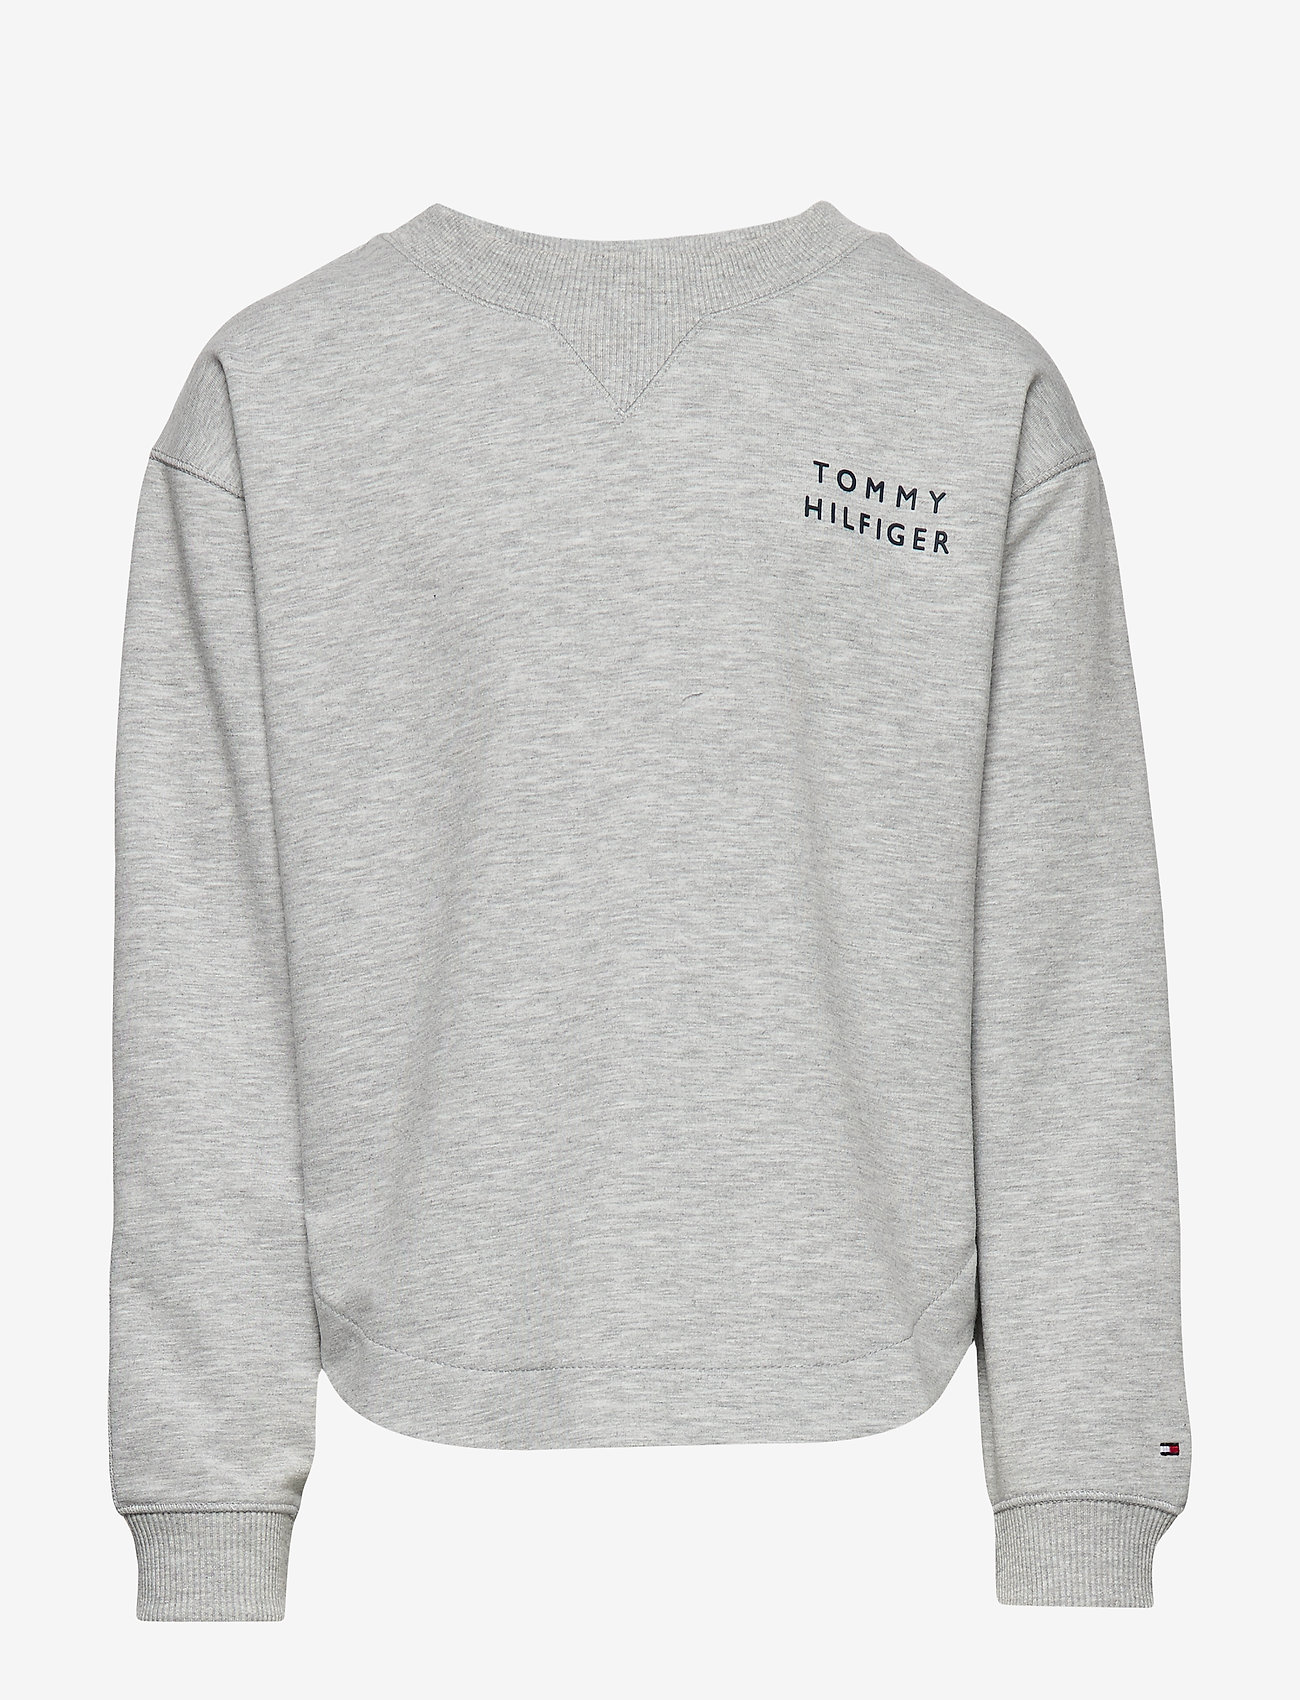 tommy hilfiger tape sweatshirt grey